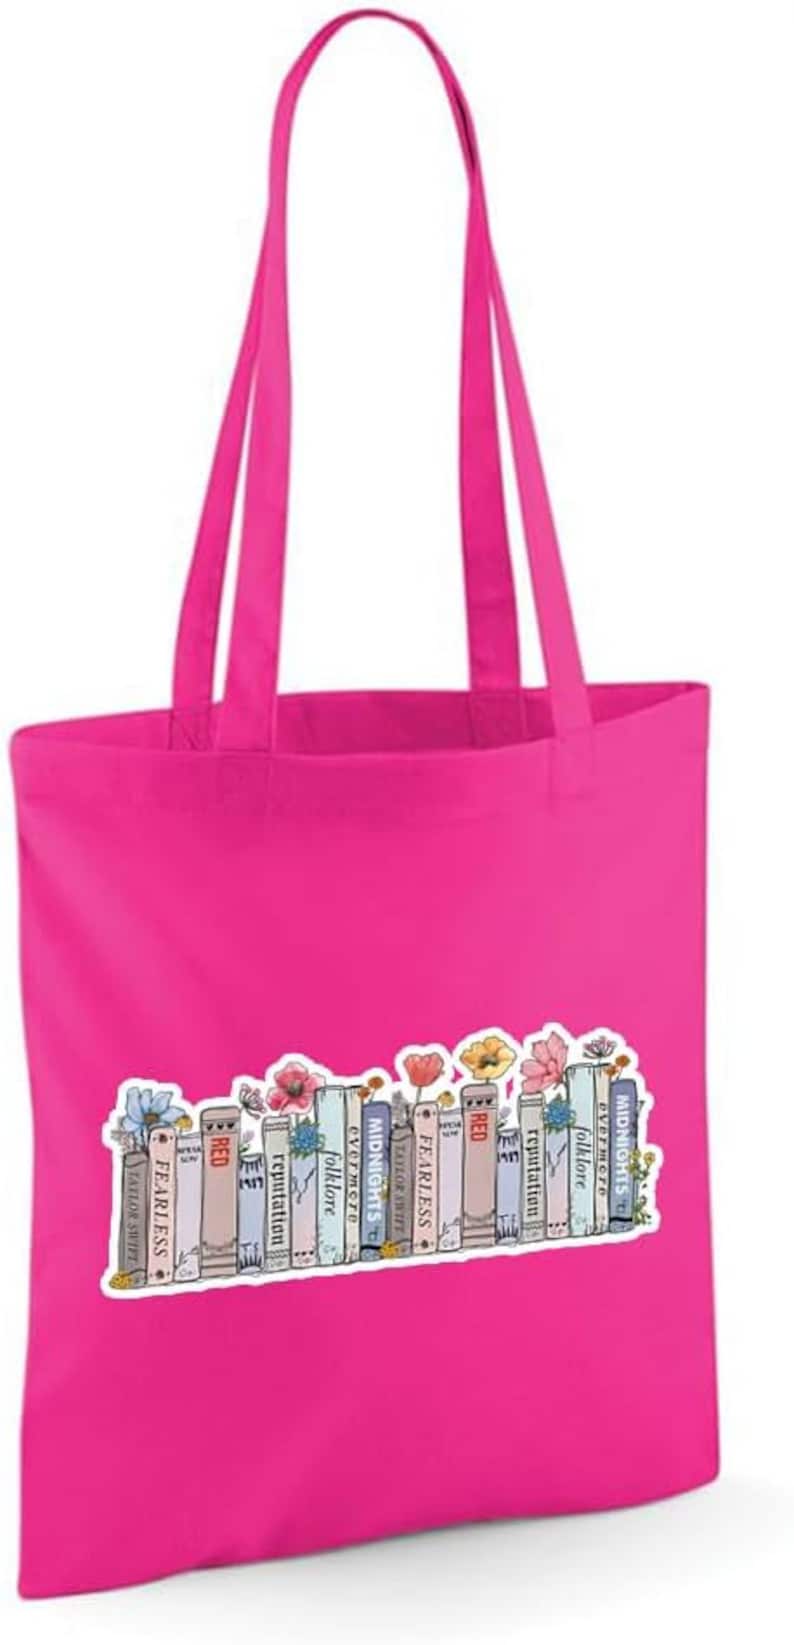 Taylor Albums as books Bag, Floral Bookcase Albums Design, Reusable Bag, Shopping Bag, Tote Bag. Pink